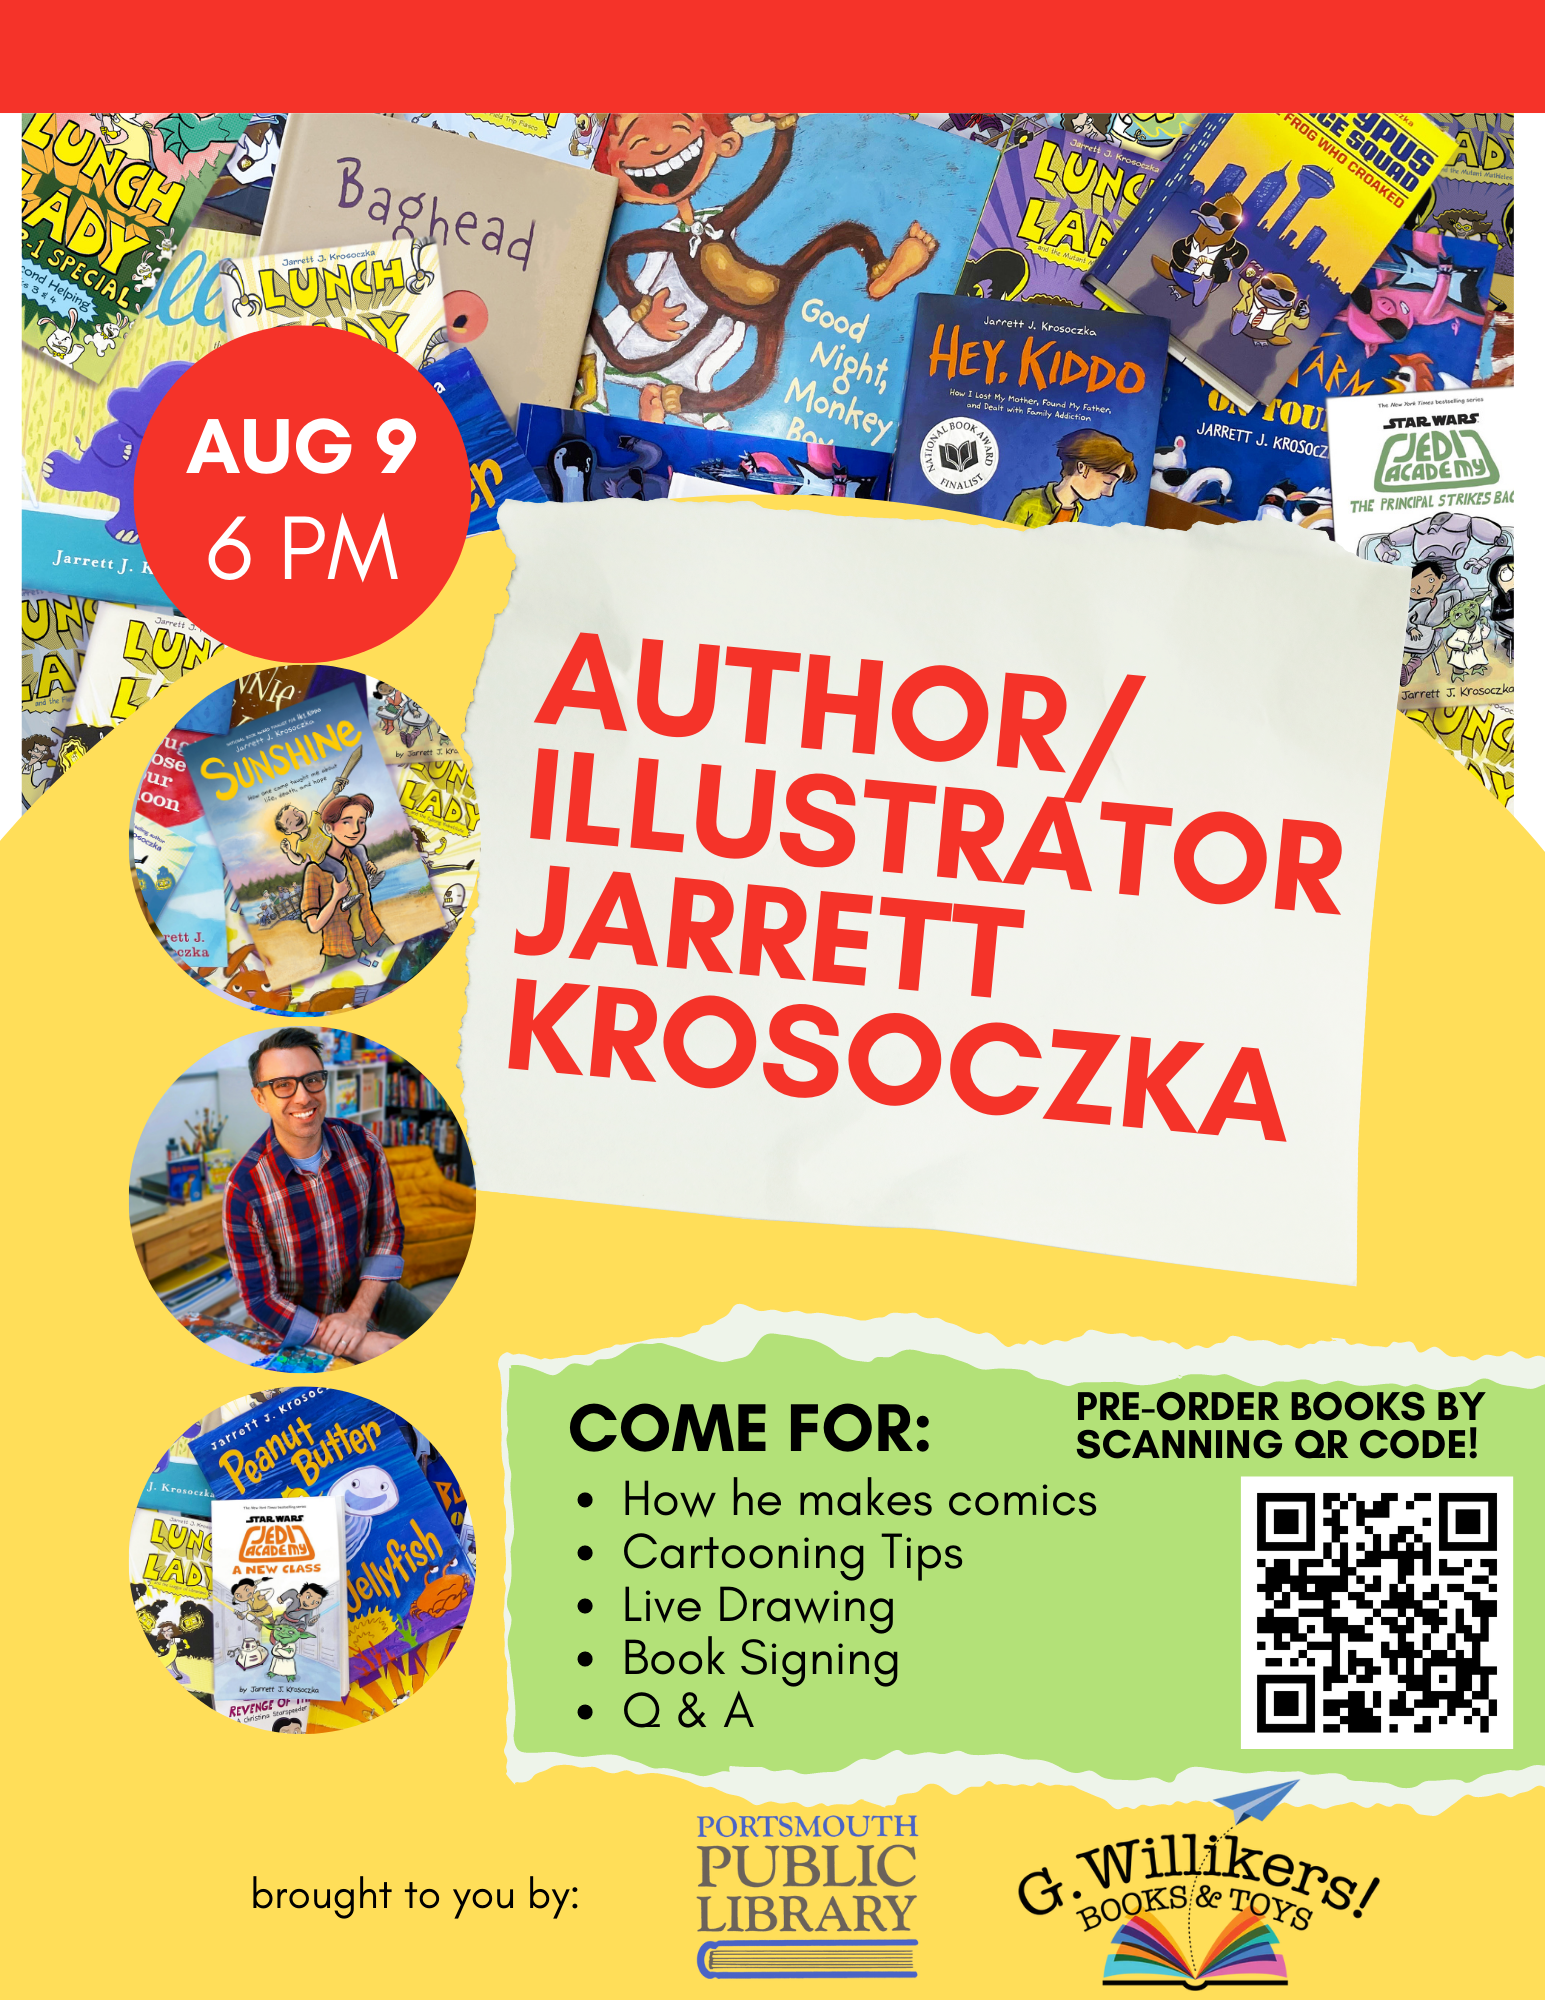 Author/Illustrator Jarrett Krosoczka Visit August 9 at 6 PM